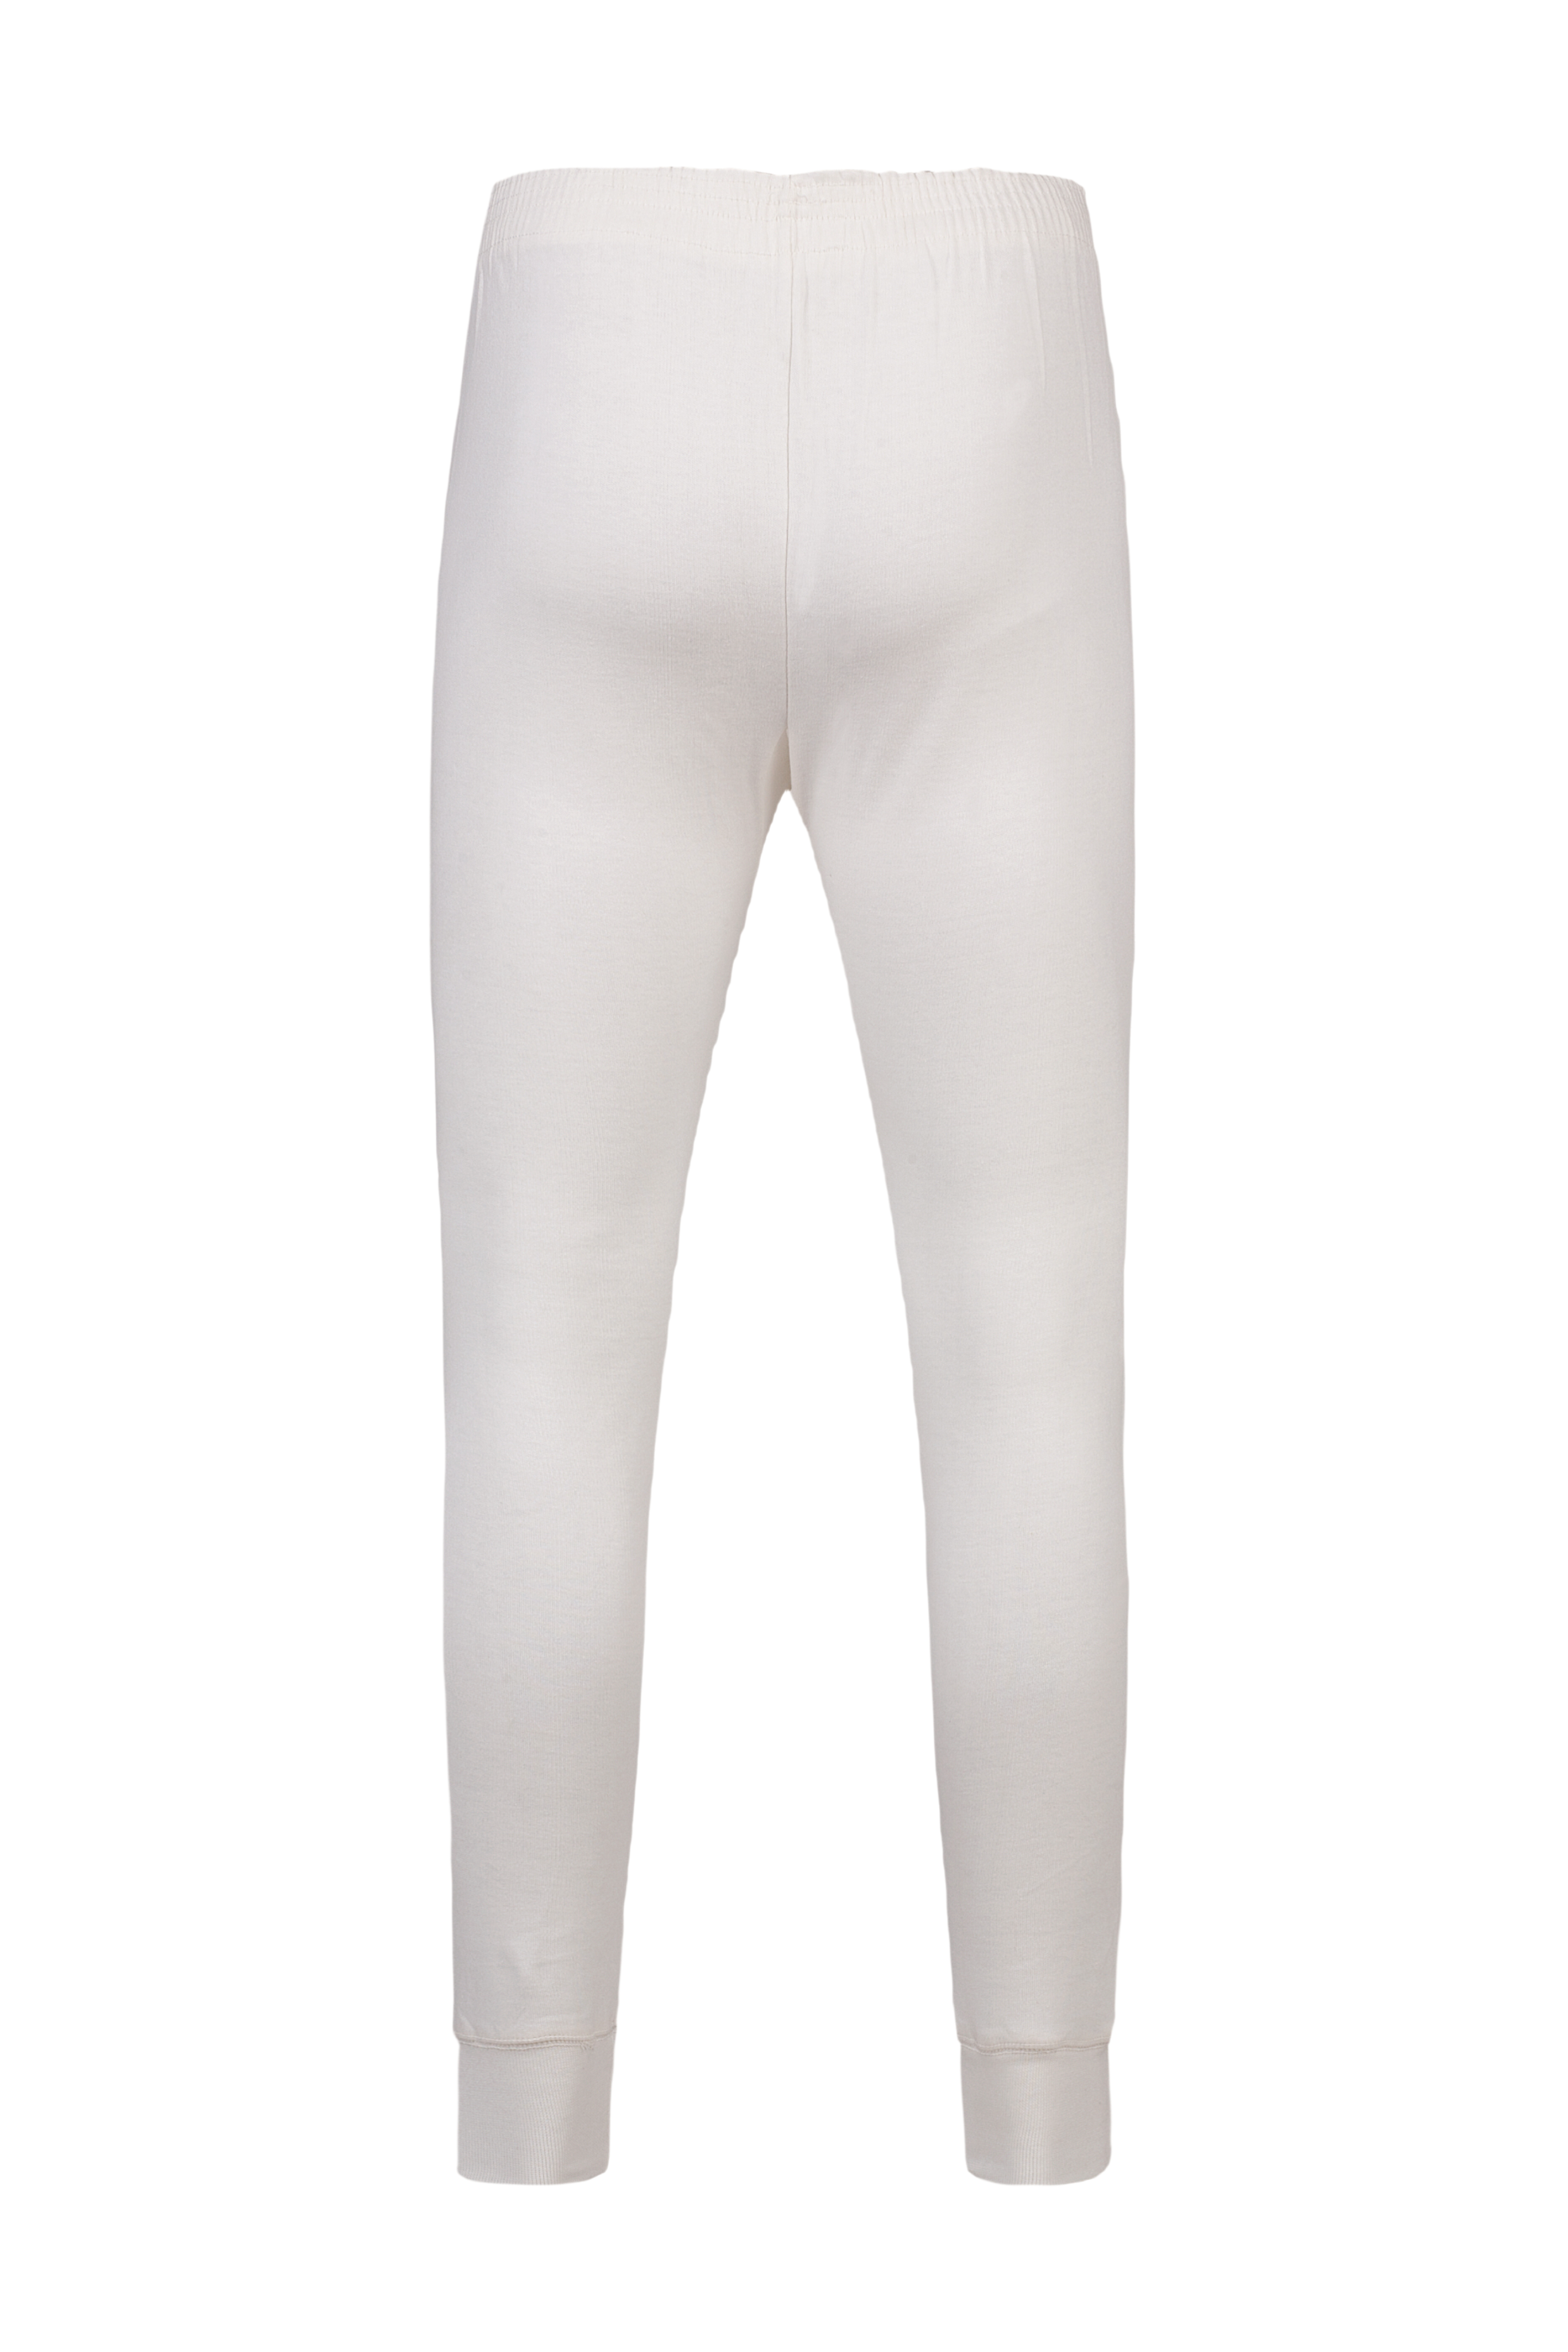 Men's Plain Thermal Trouser (999)